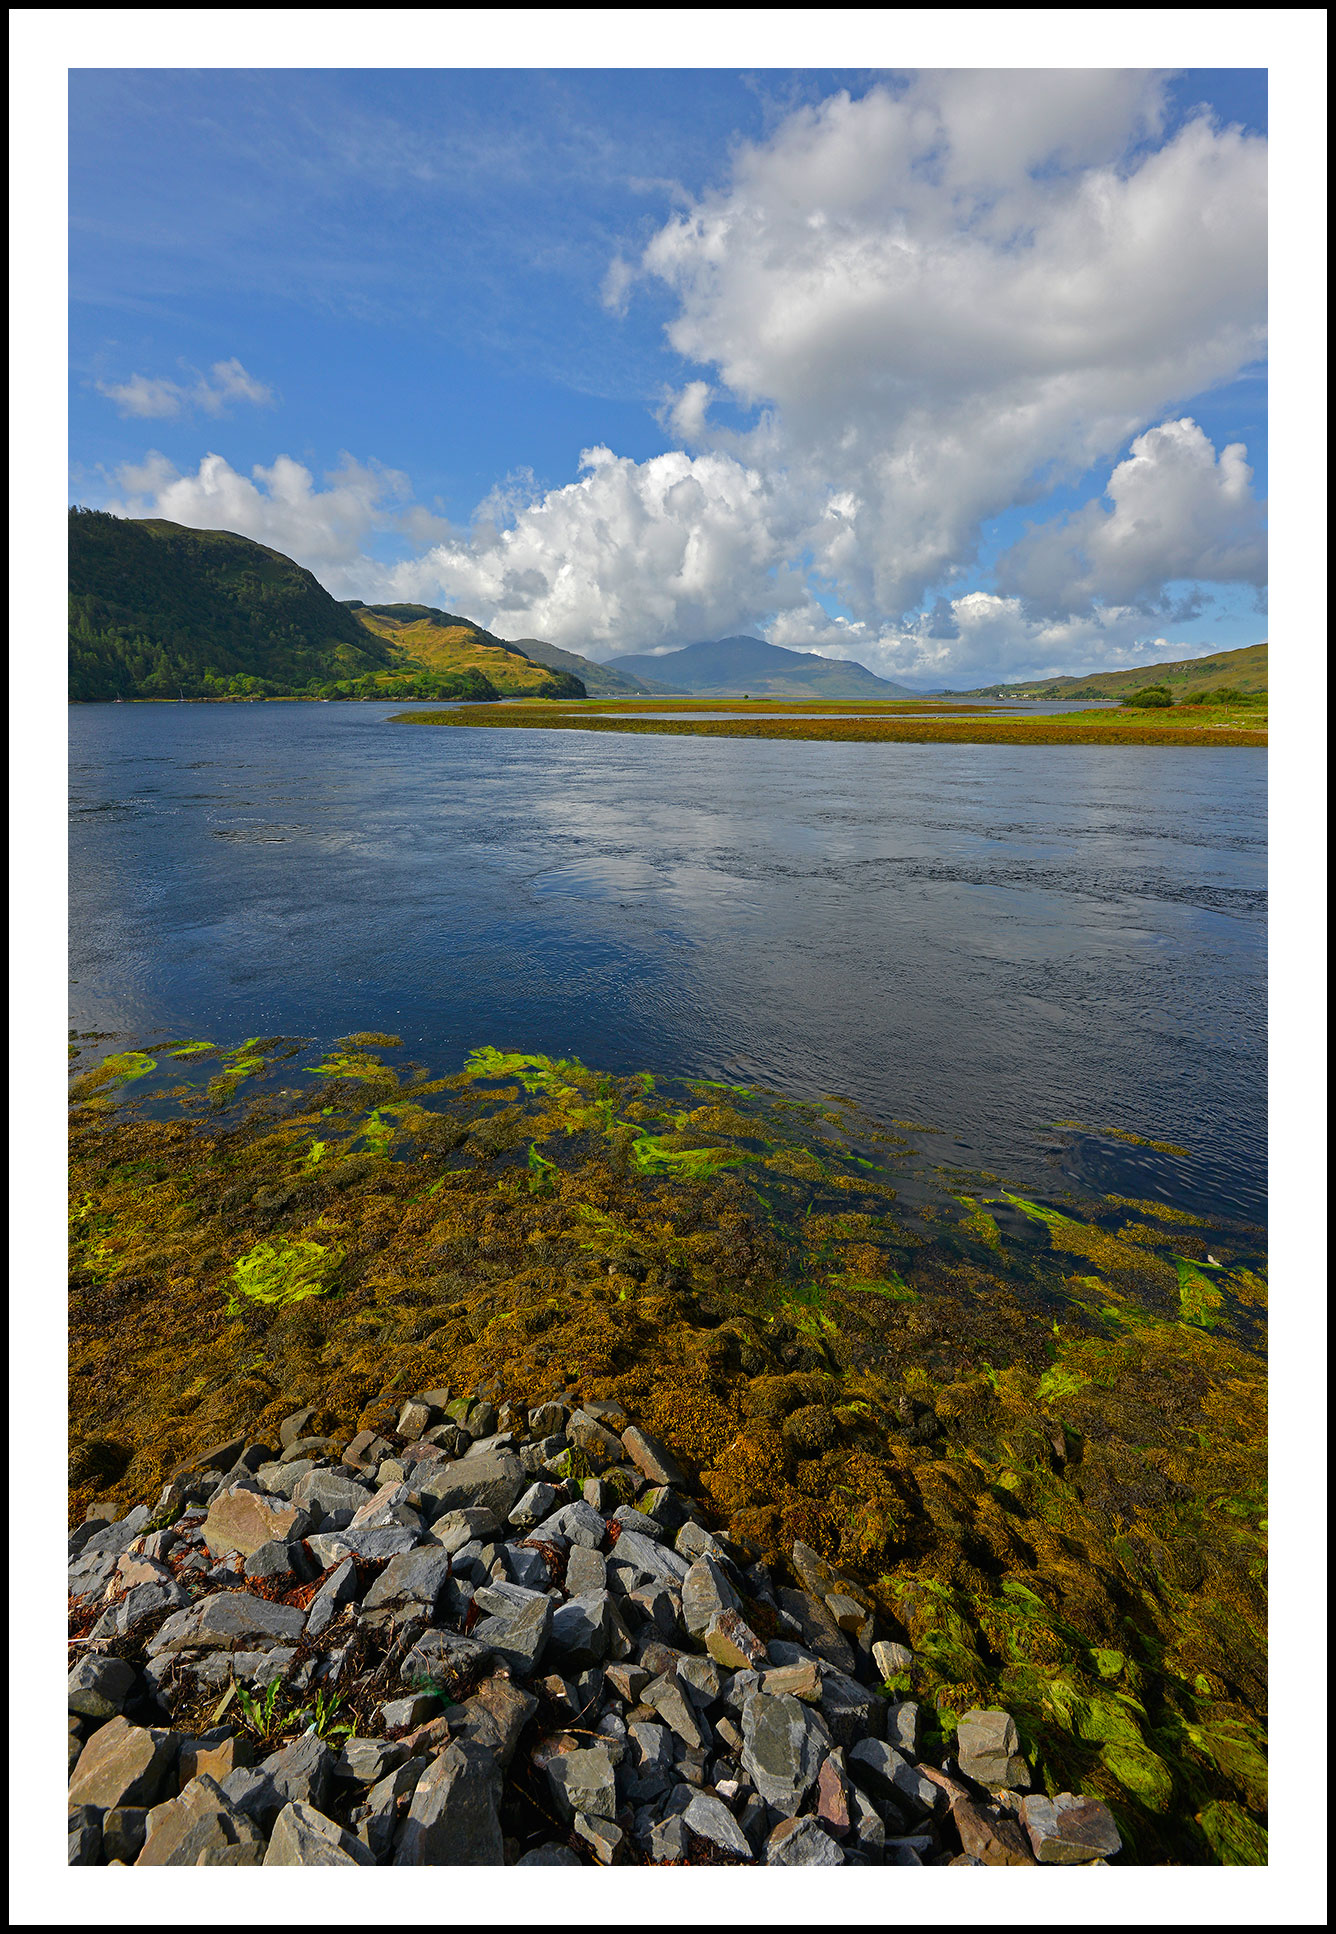 Scozia: lago marino...